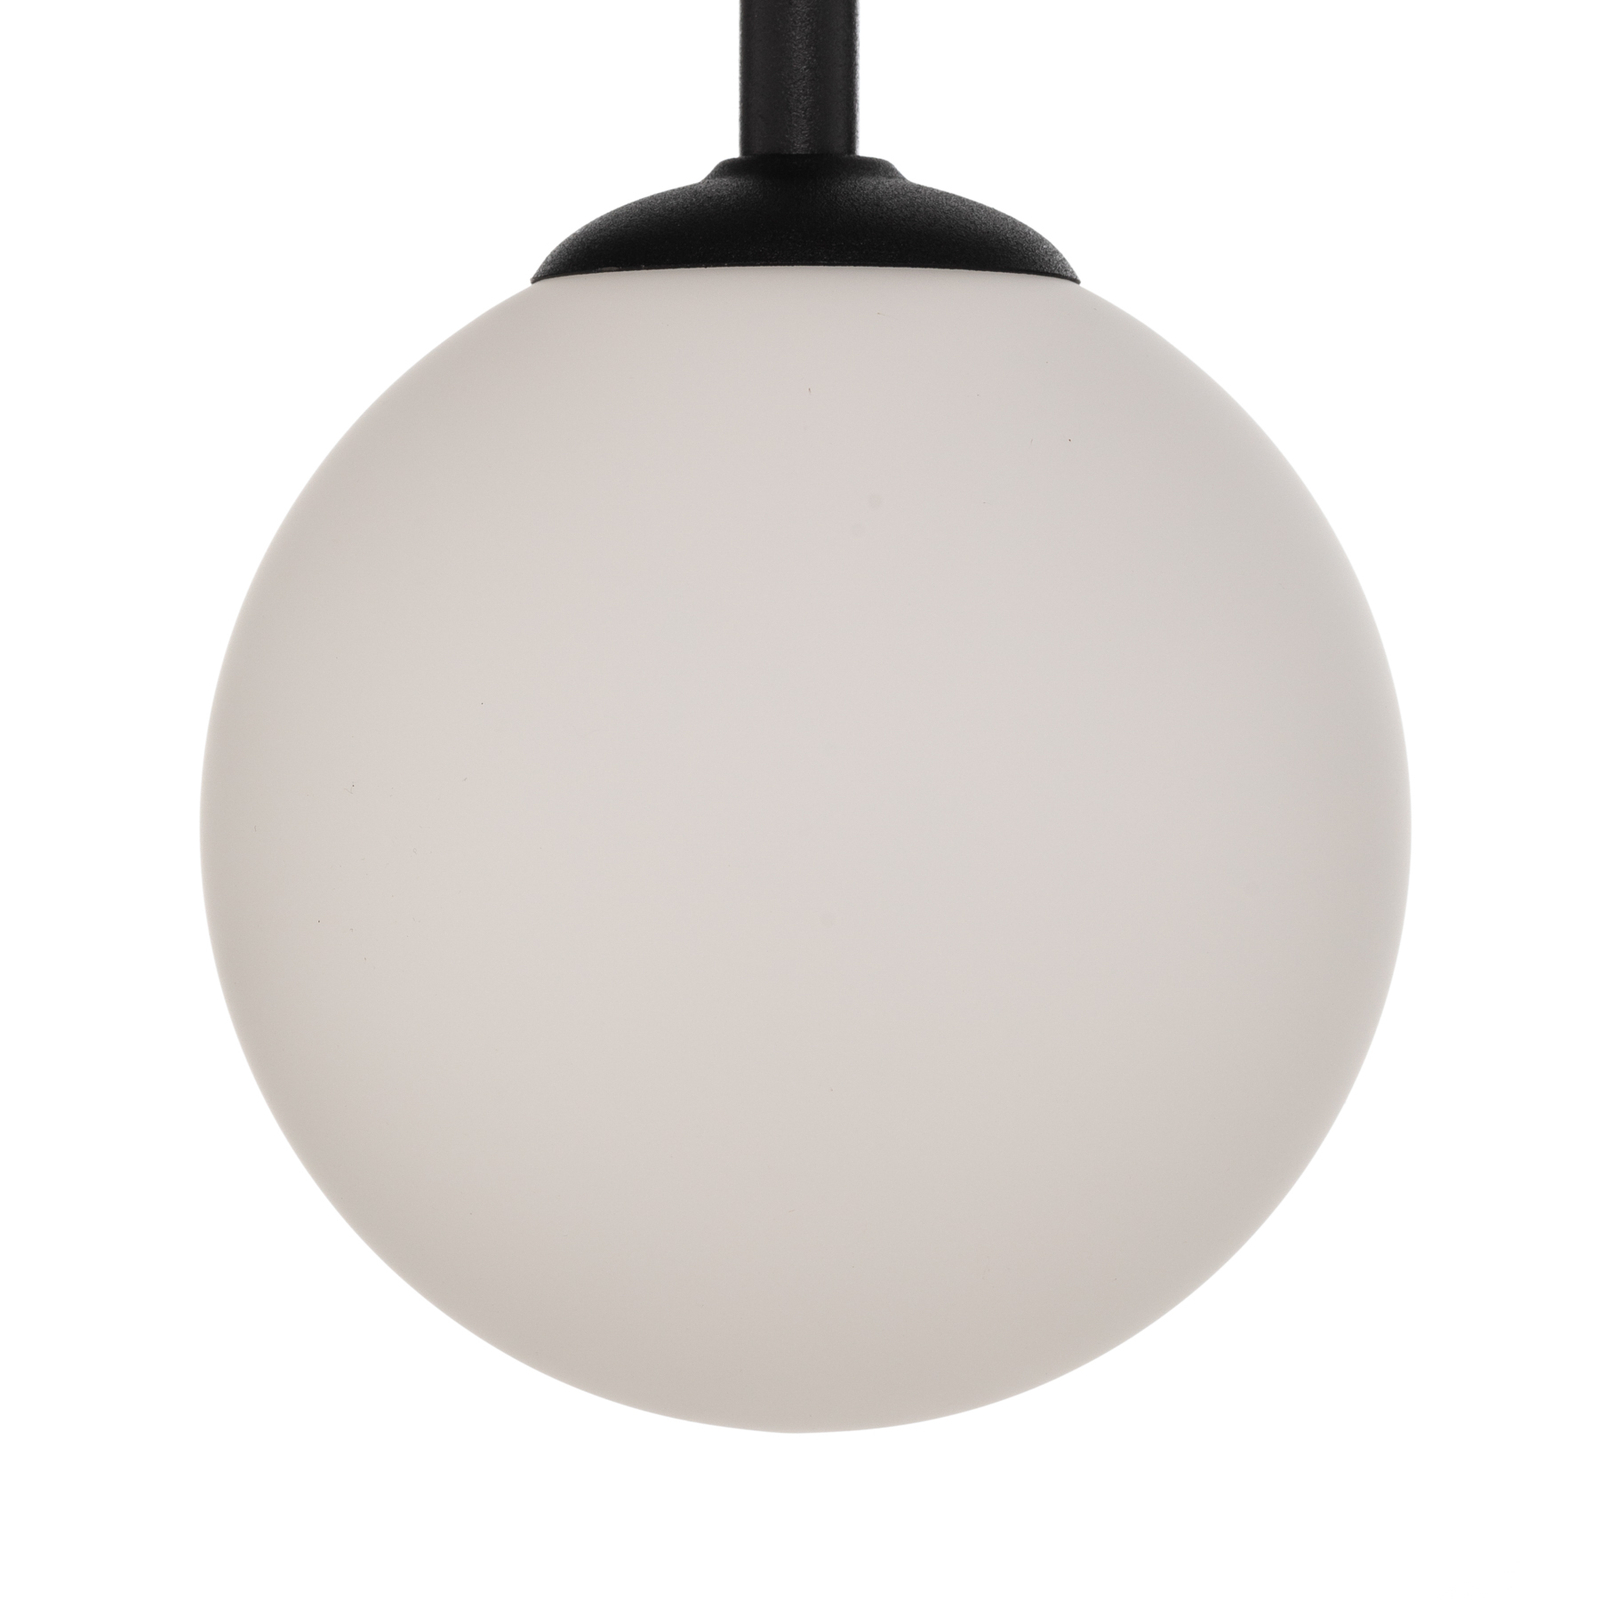 Dione ceiling light, 4-bulb, black